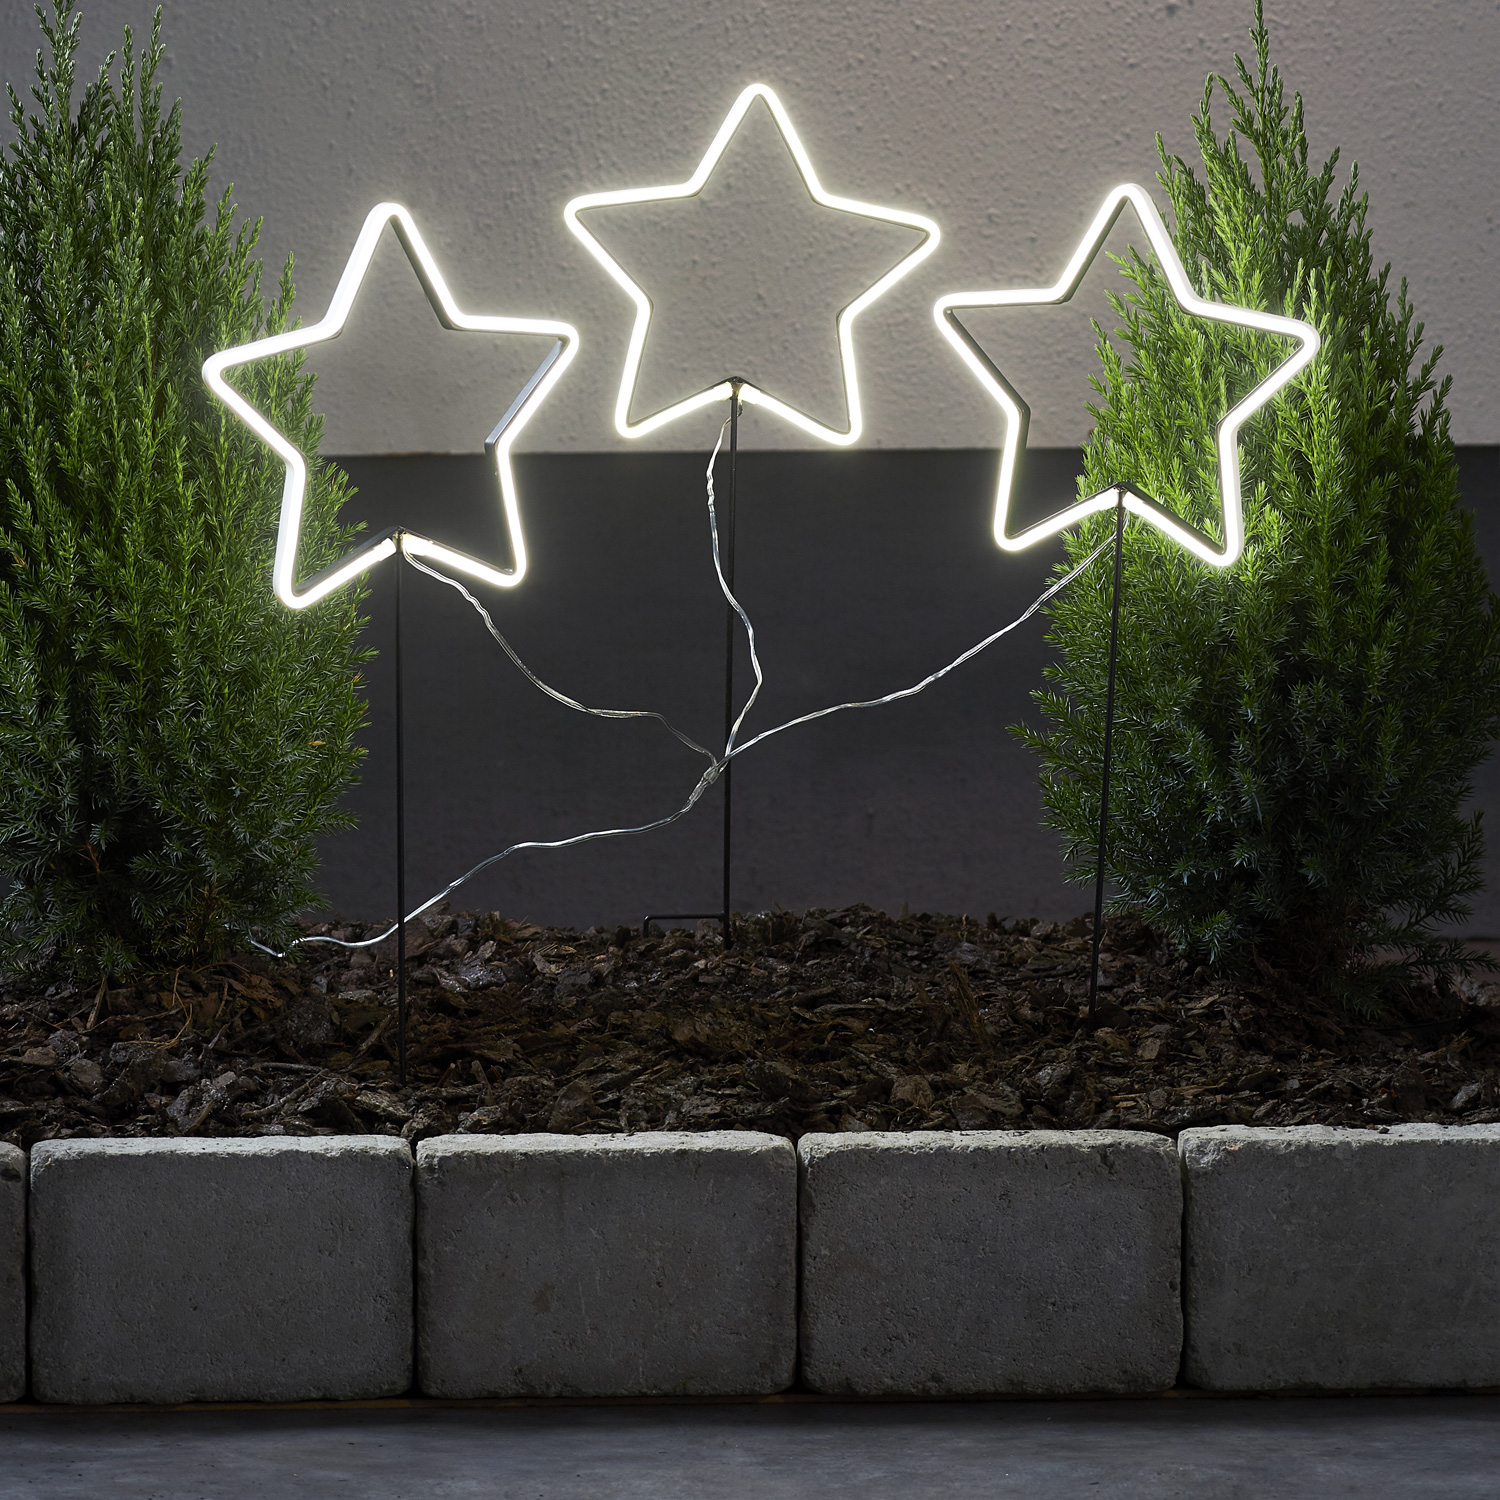 LED Neon Gartenstecker Sterne - 216 weiße LED - H: 60cm - 8